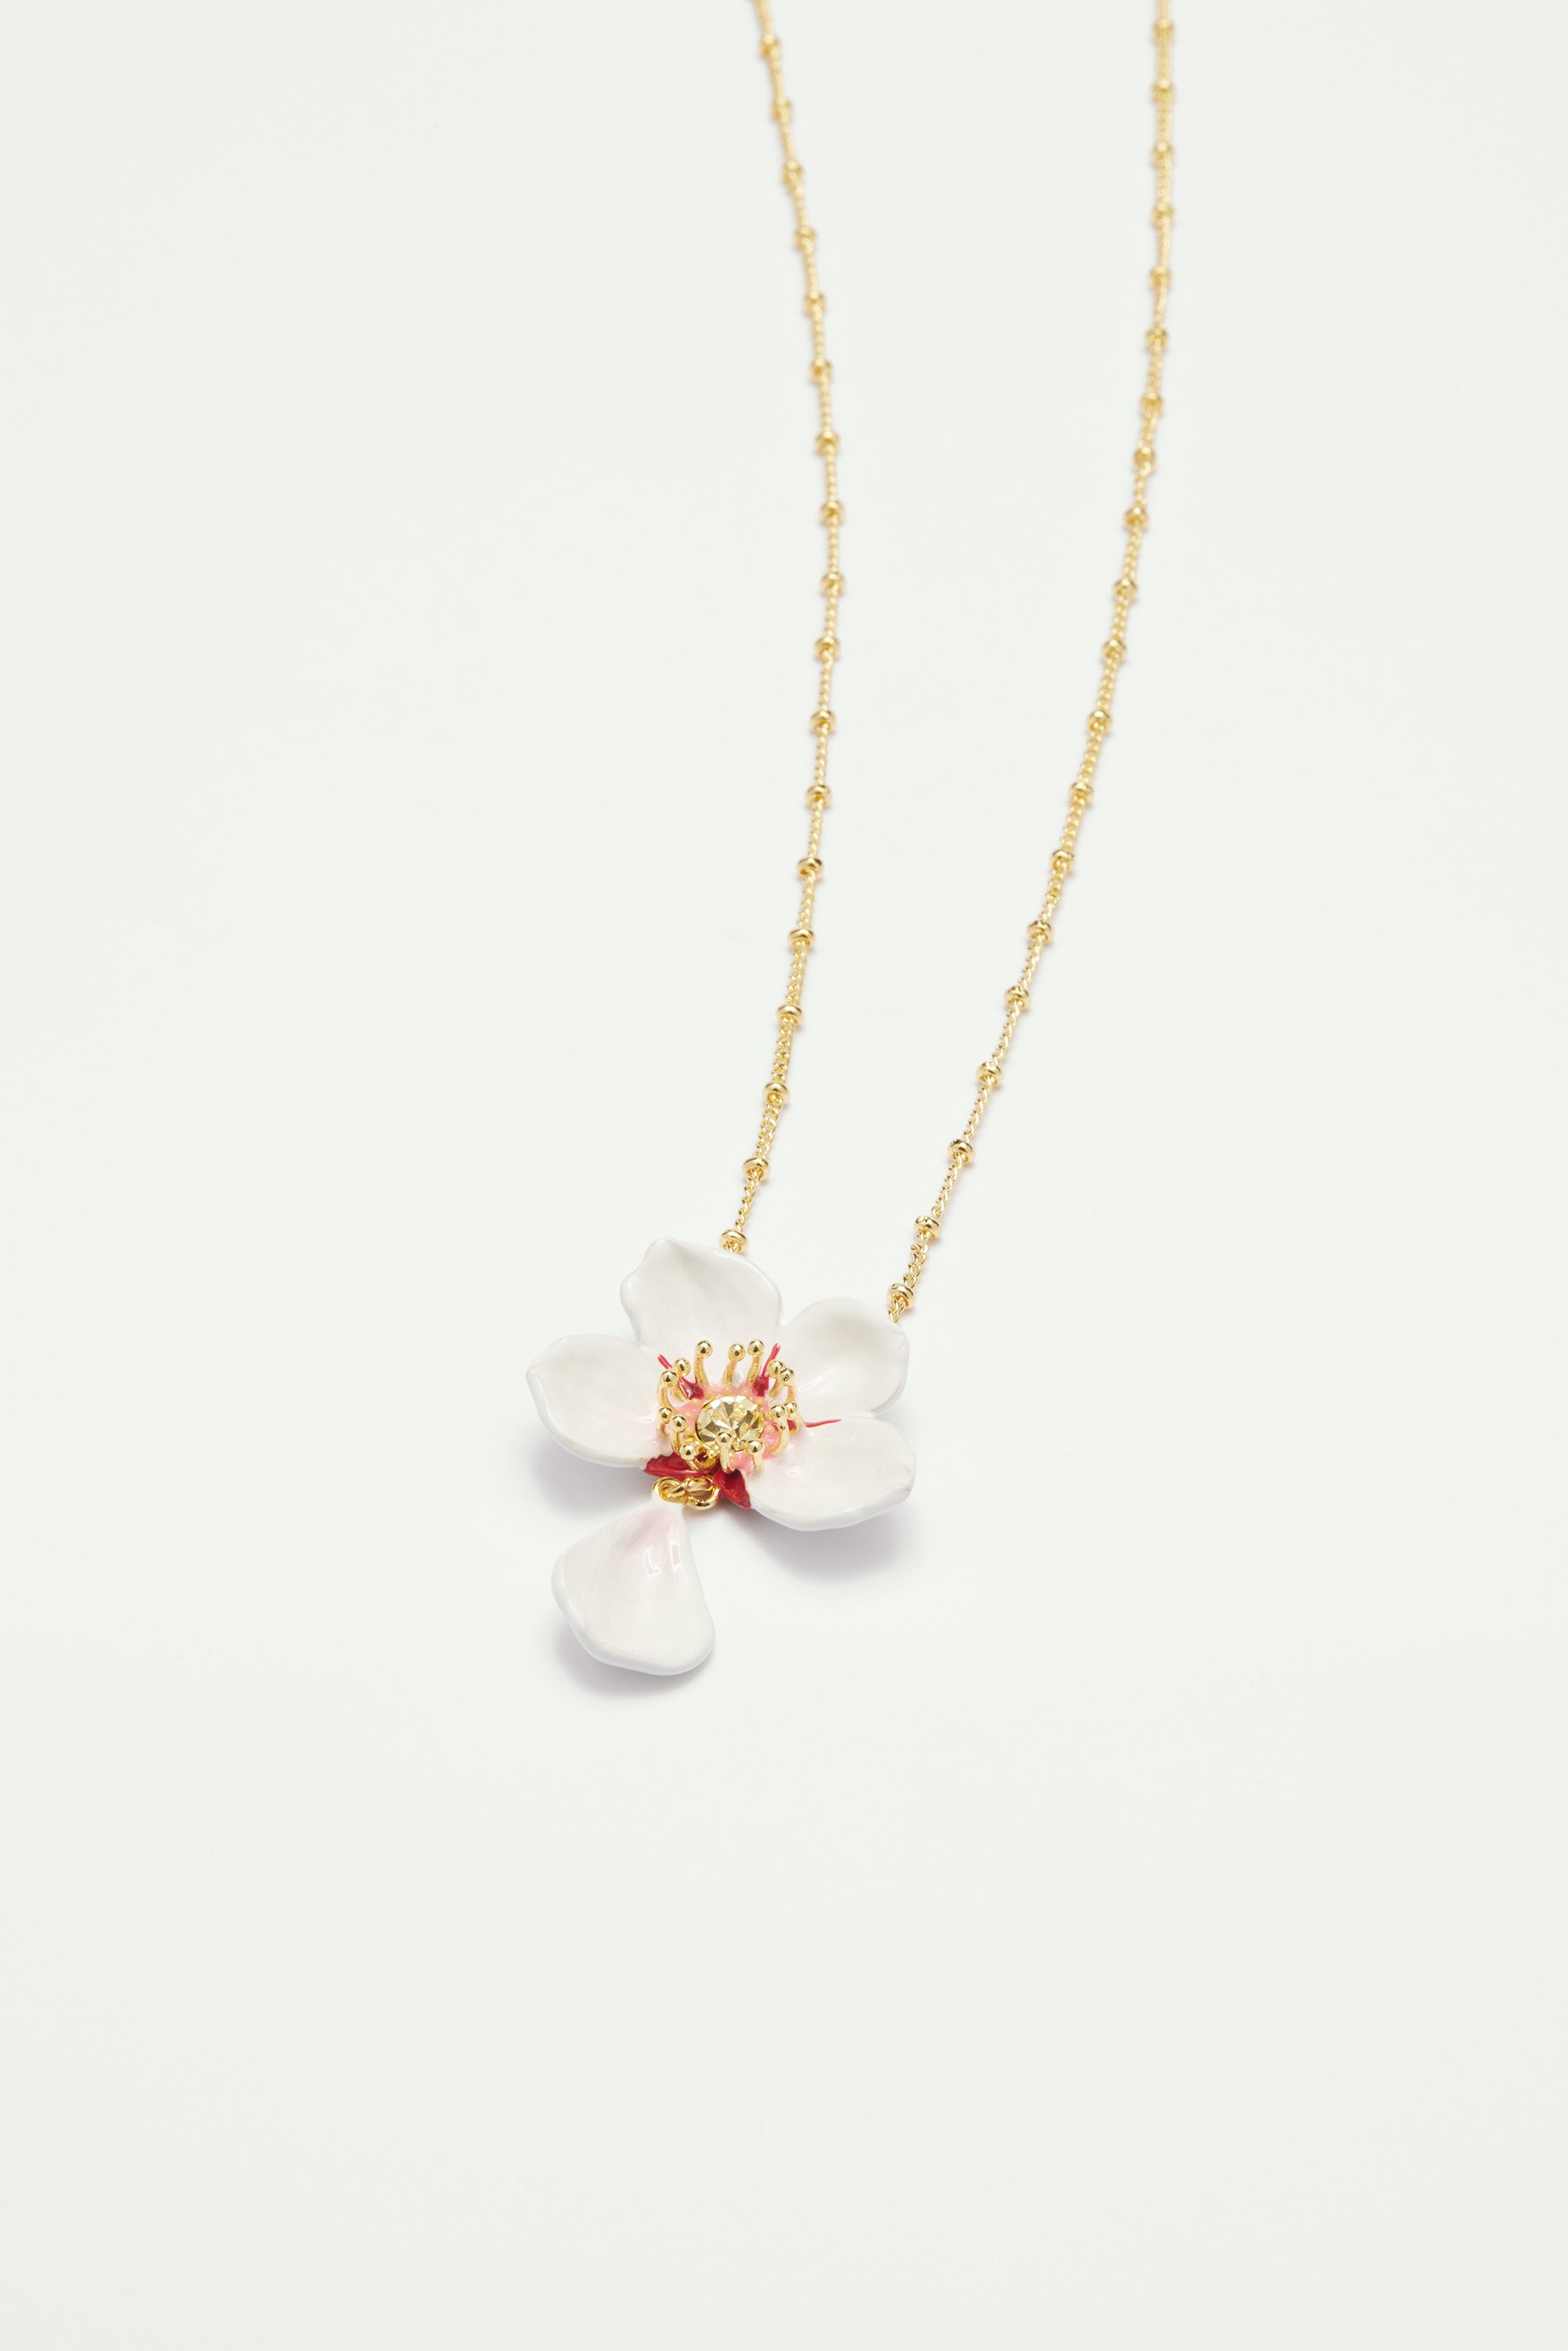 Japanese white cherry blossom pendant necklace